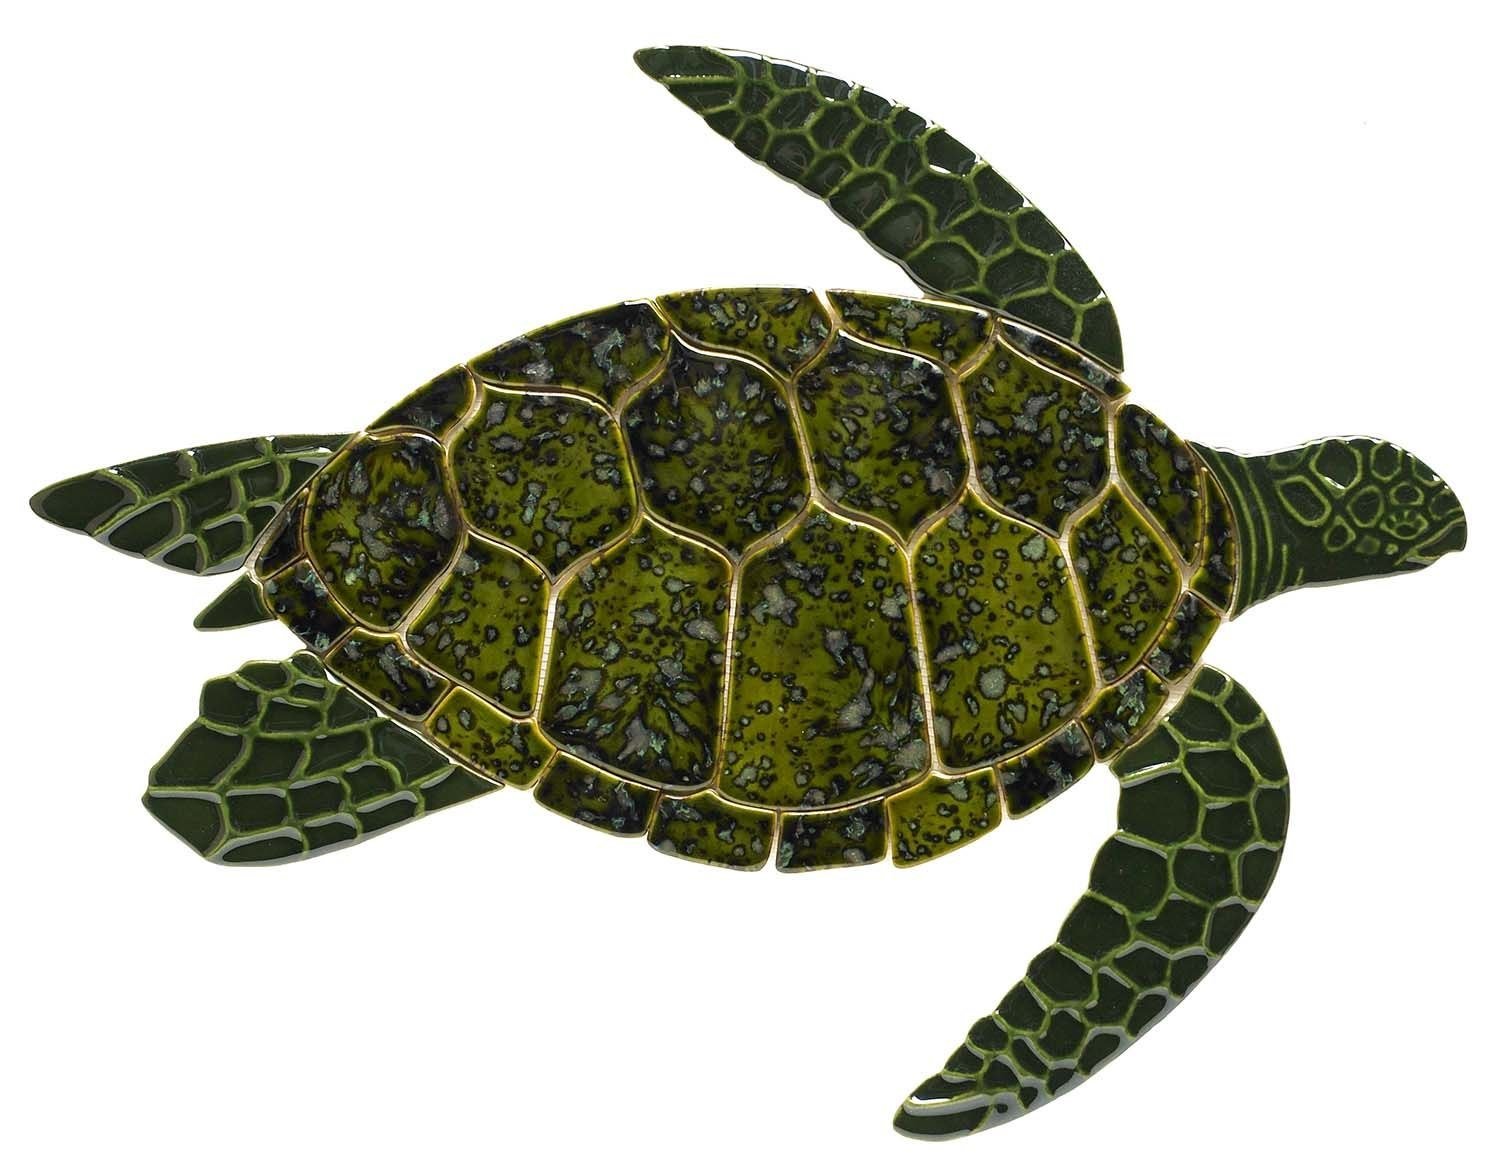 Turtle shell. Панцирь морской черепахи. Панцирь зелёной морской черепахи. Карапакса морской черепахи. Морская черепаха сбоку.